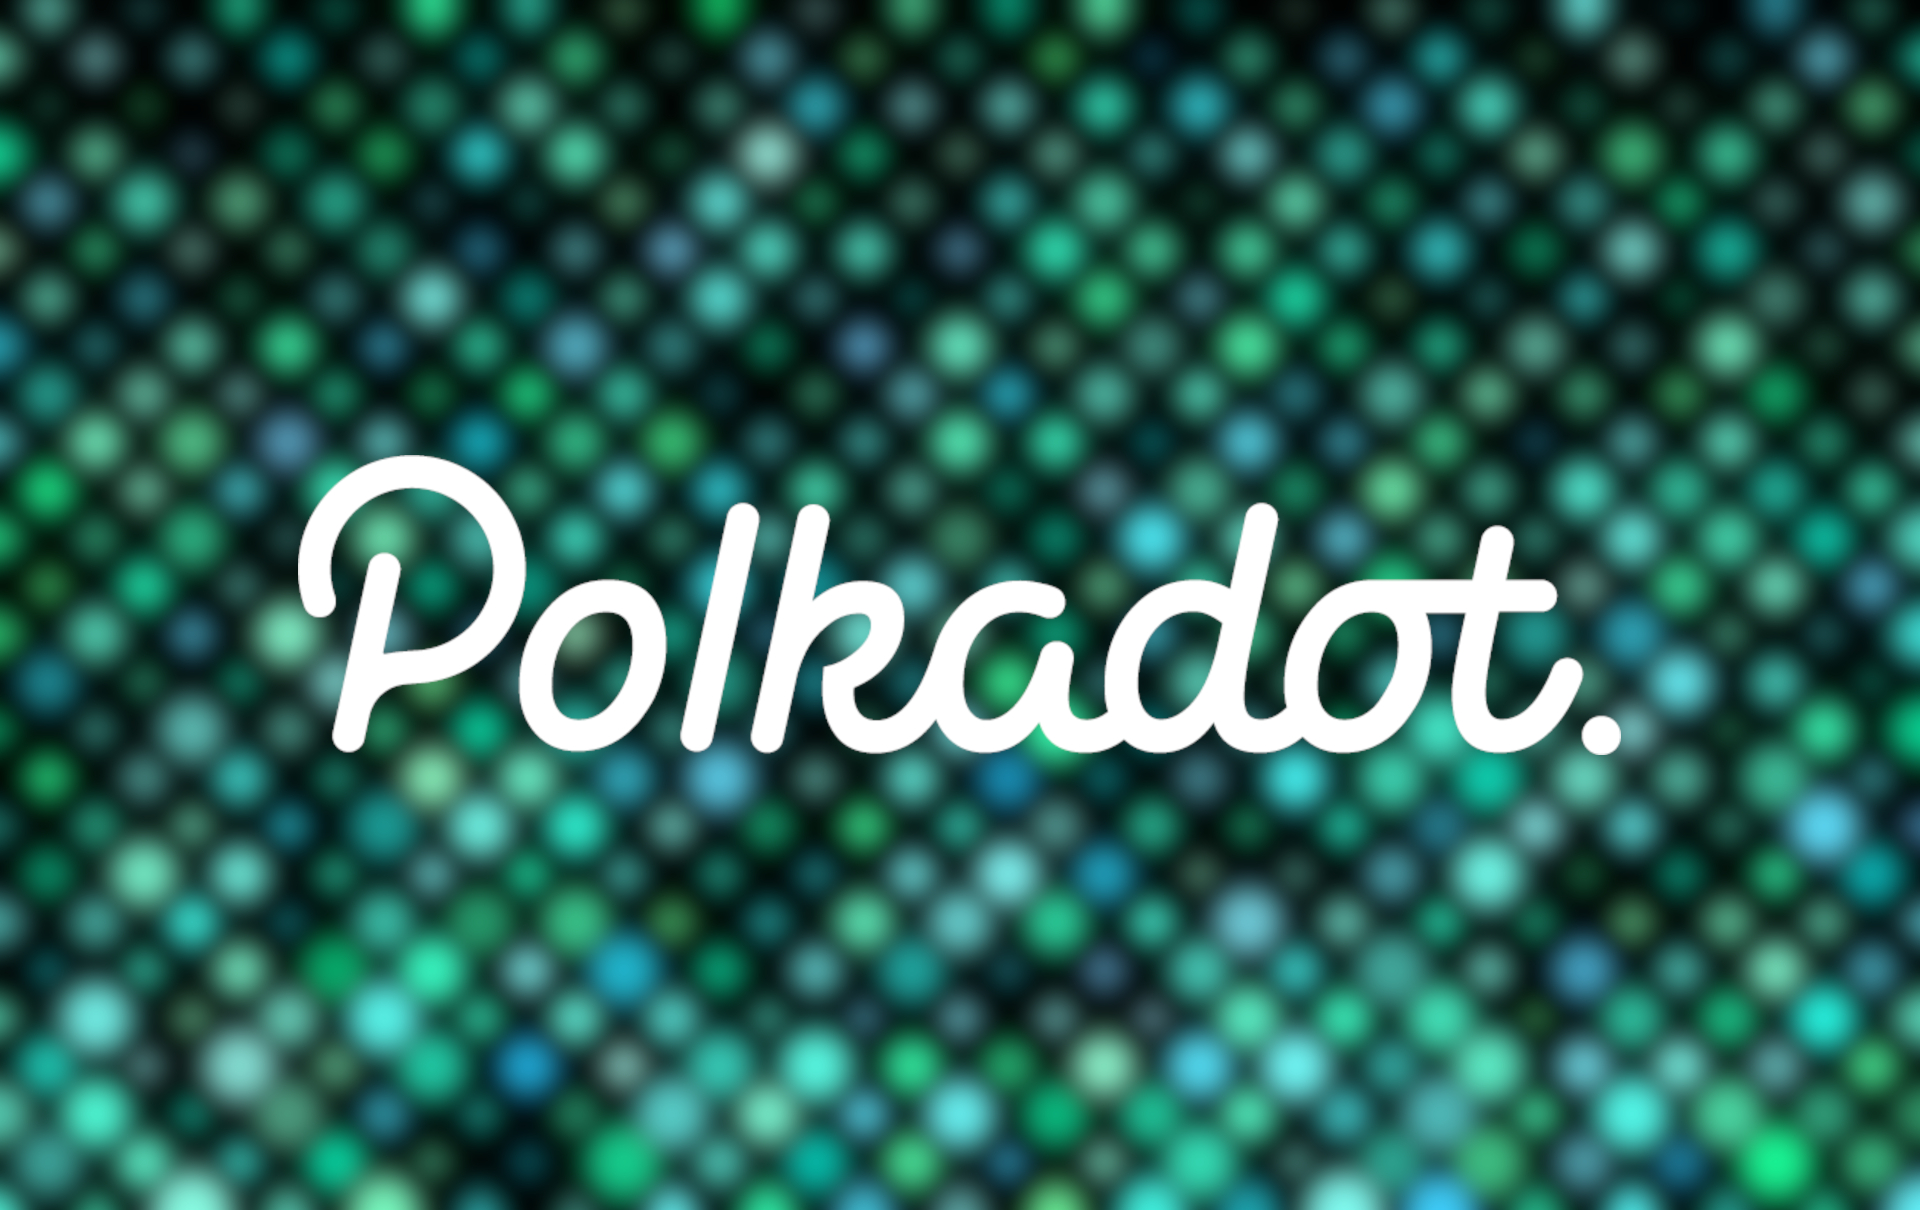 Polkadot (DOT) cryptocurrency logo cover image